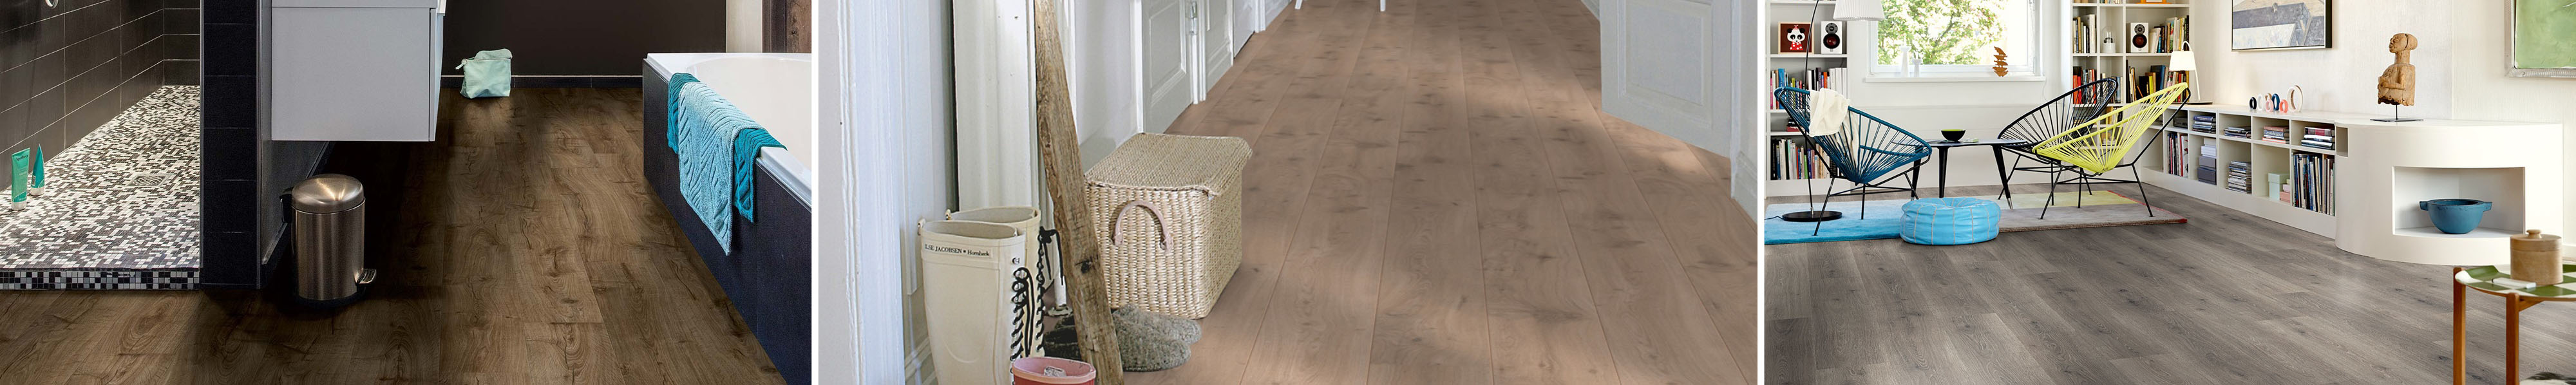 Laminate Floors Laminate Wood Flooring Carpet Call